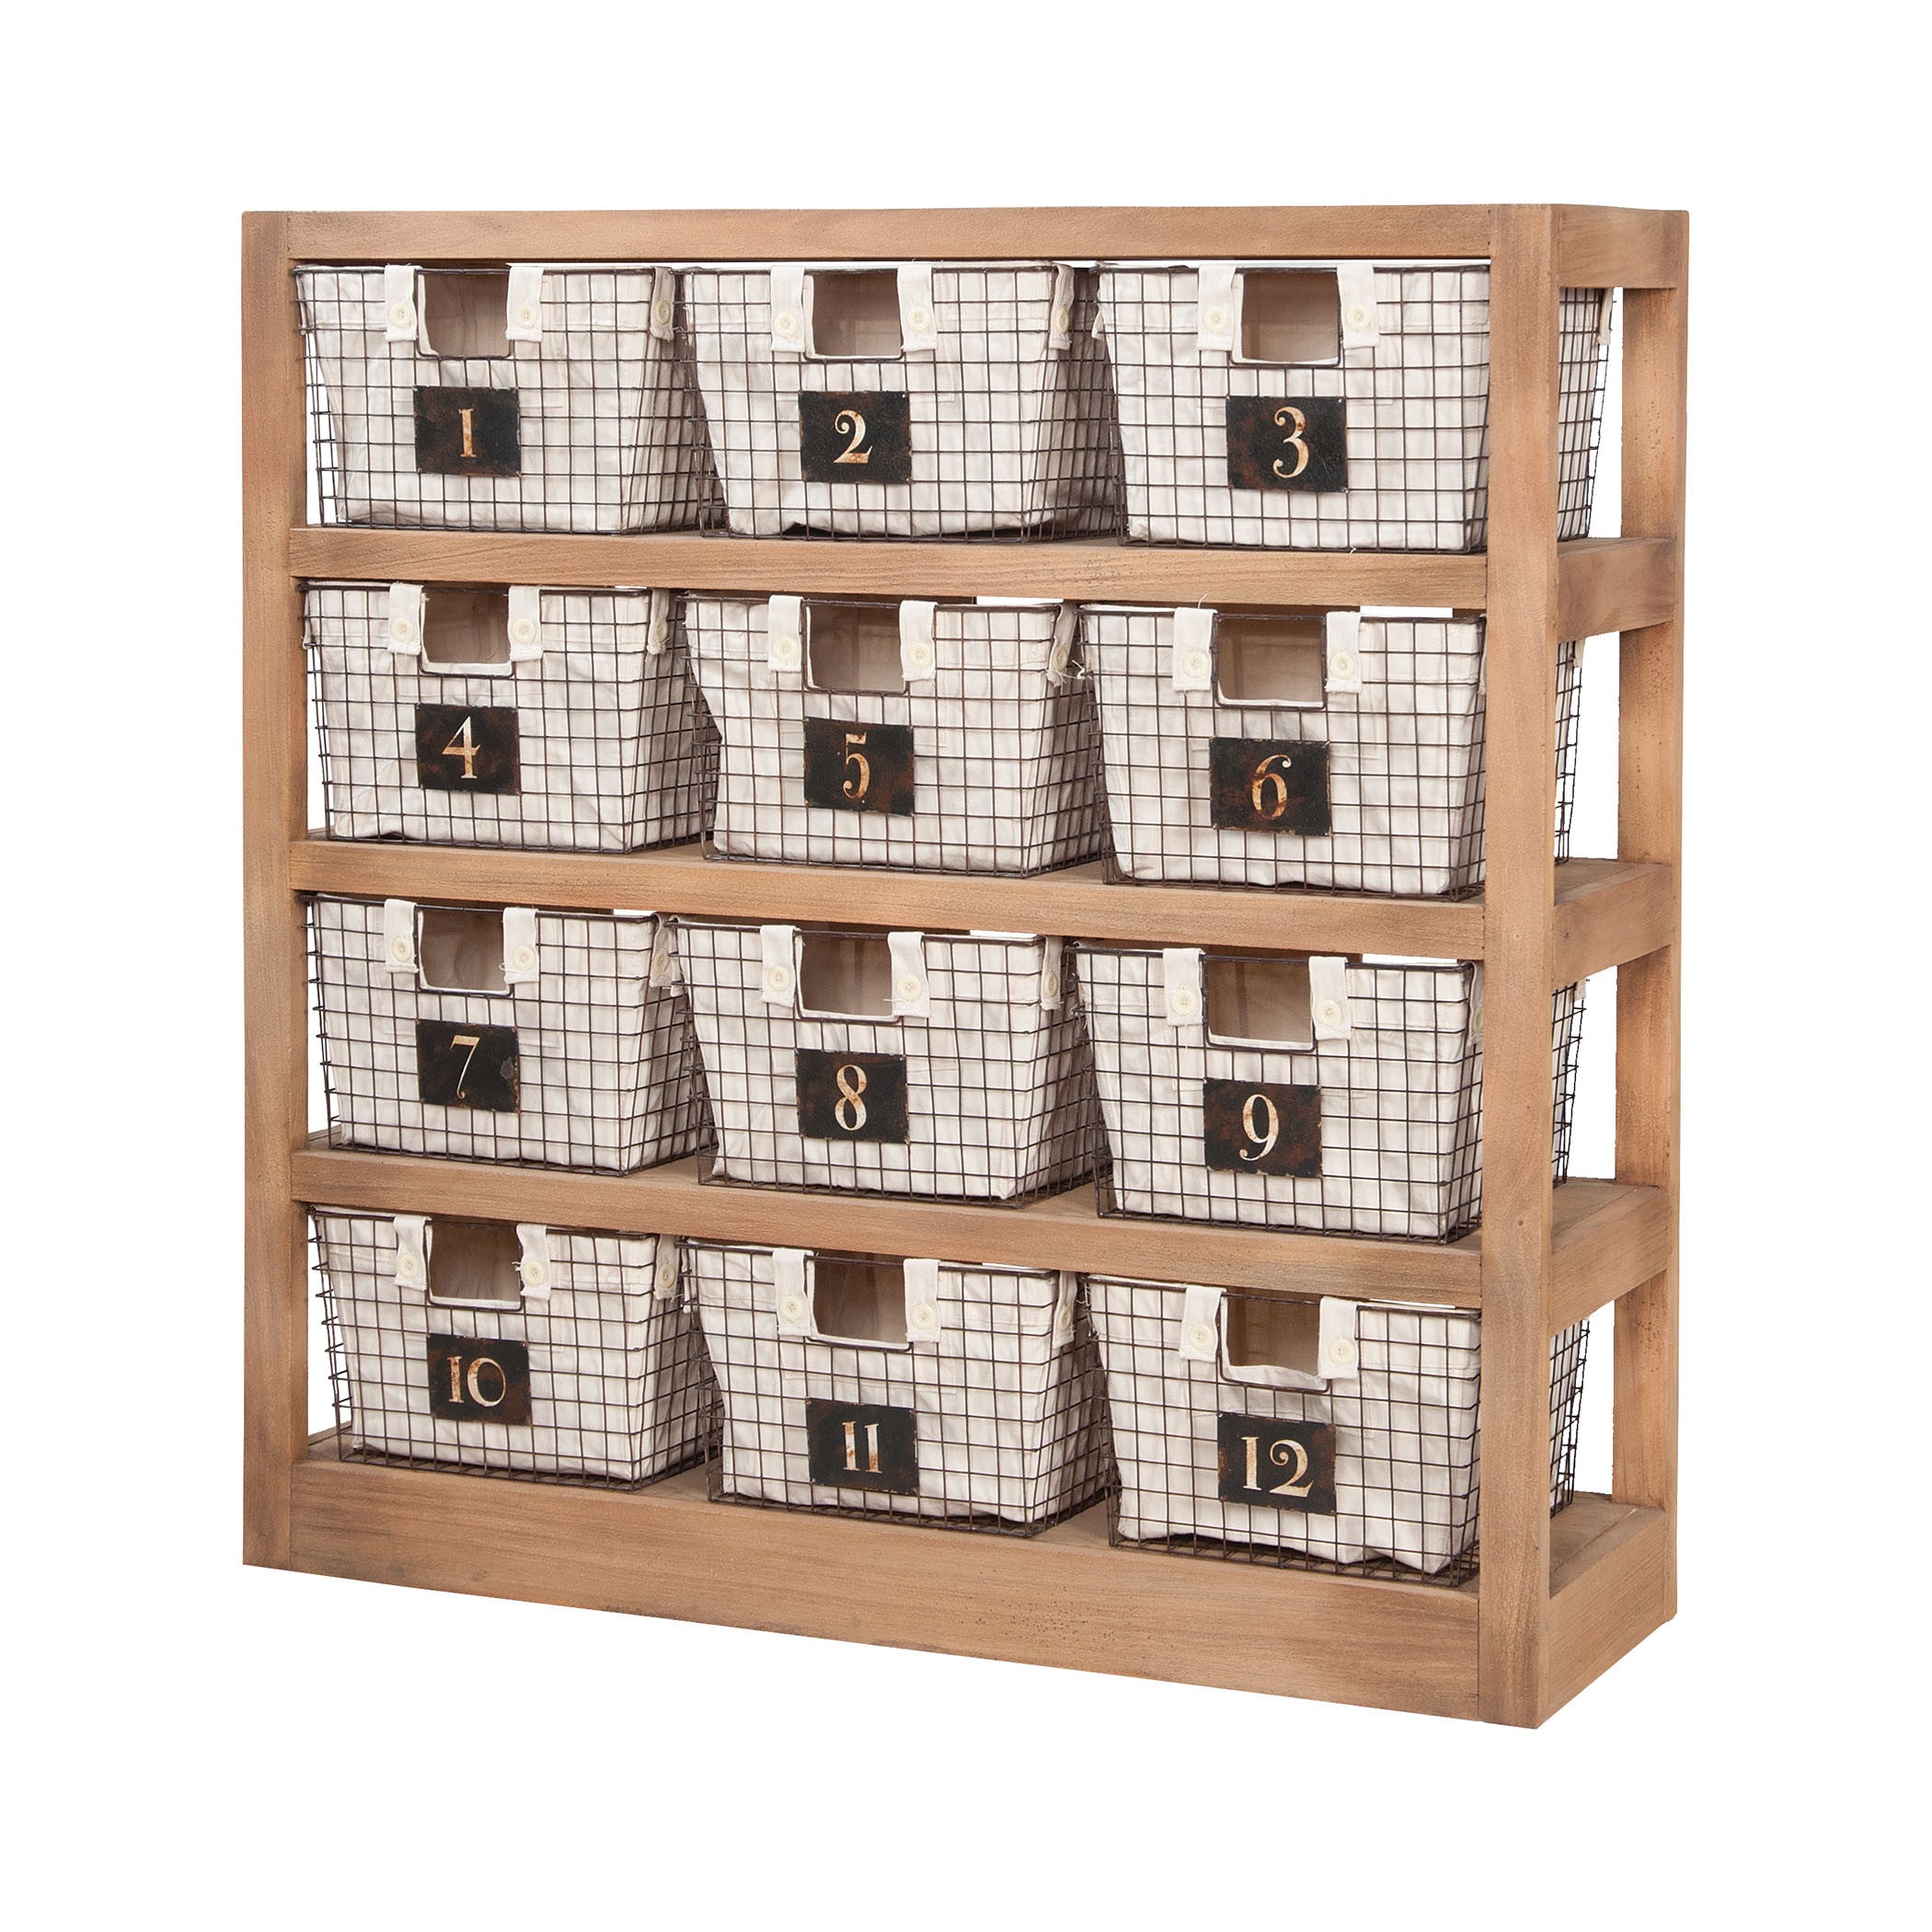 Guildmaster Gui-625060 Locker Baskets Collection Honey Oak Finish Shelf